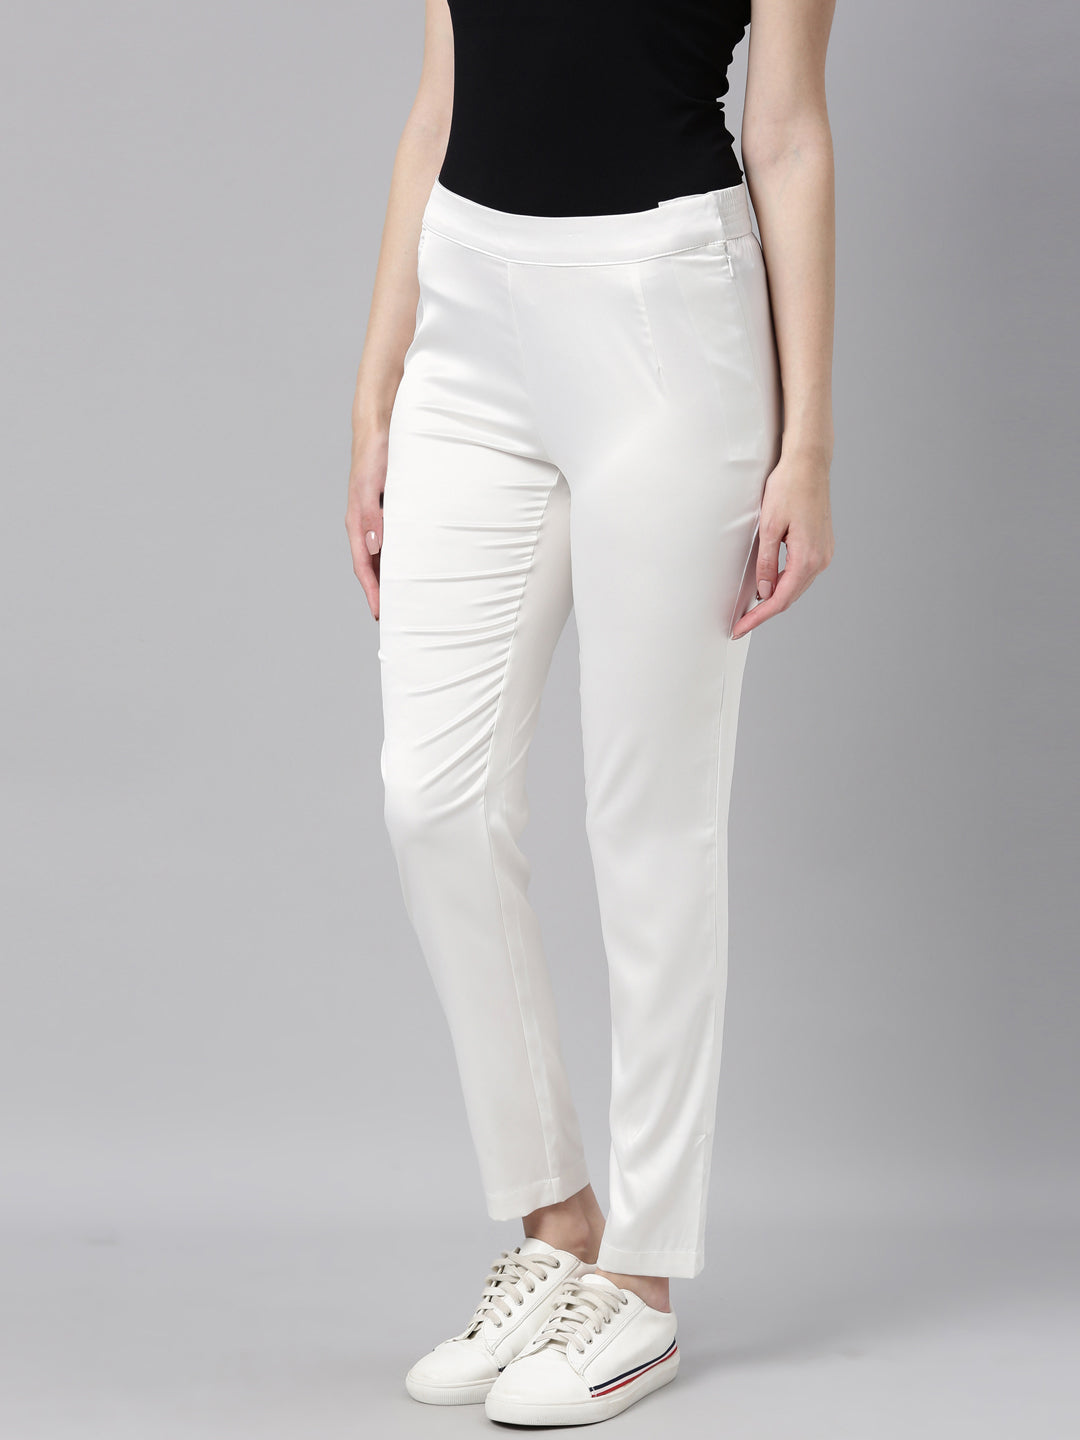 Cigarette trousers - White/Striped - Ladies | H&M